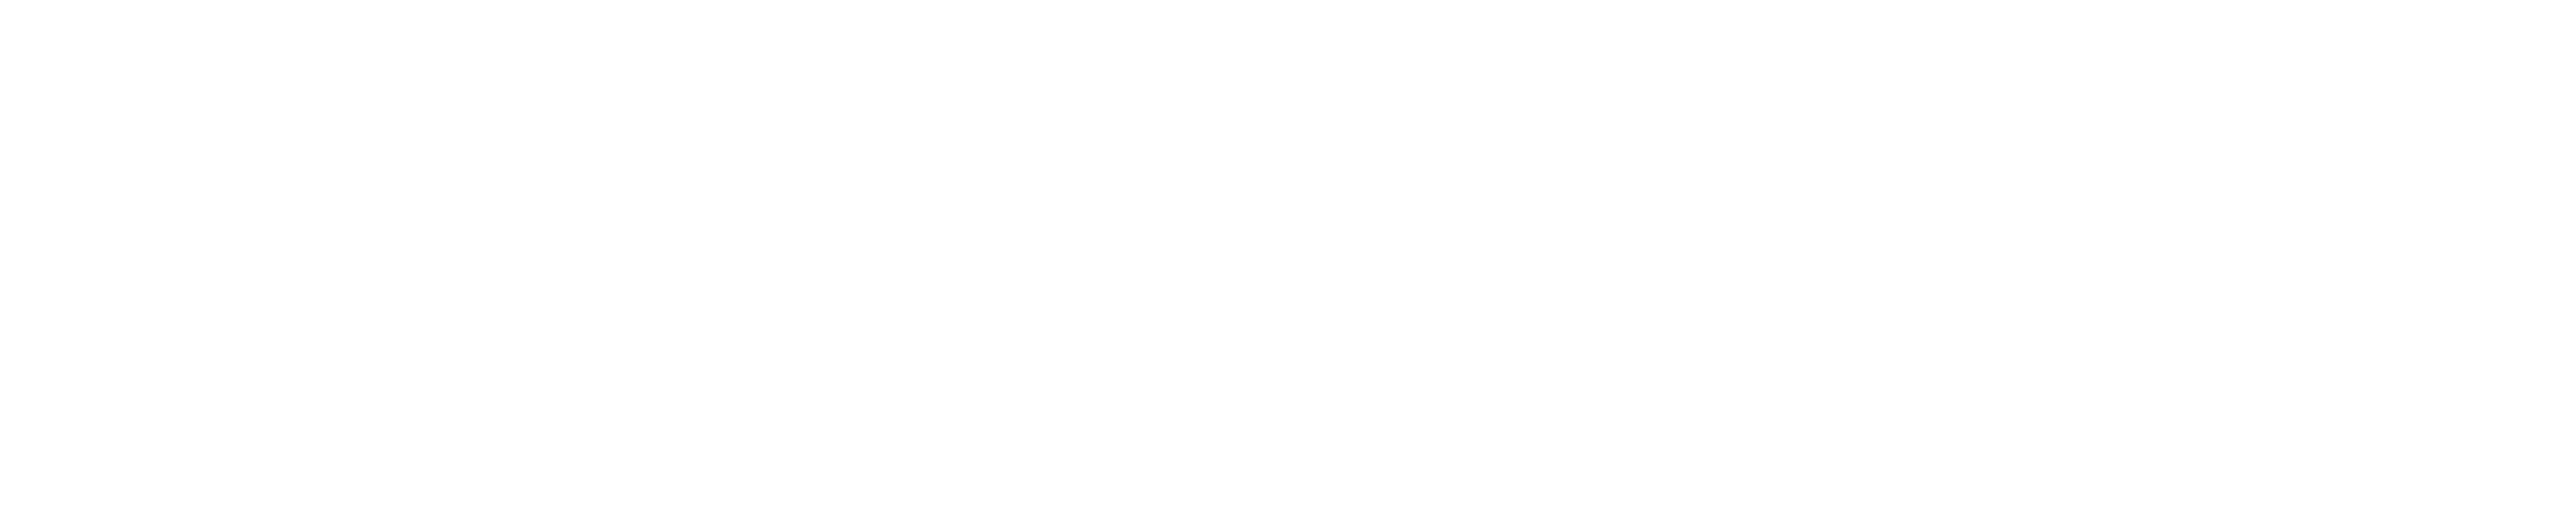 Accor_Arena_horizontal_logo-monochrome_Blc